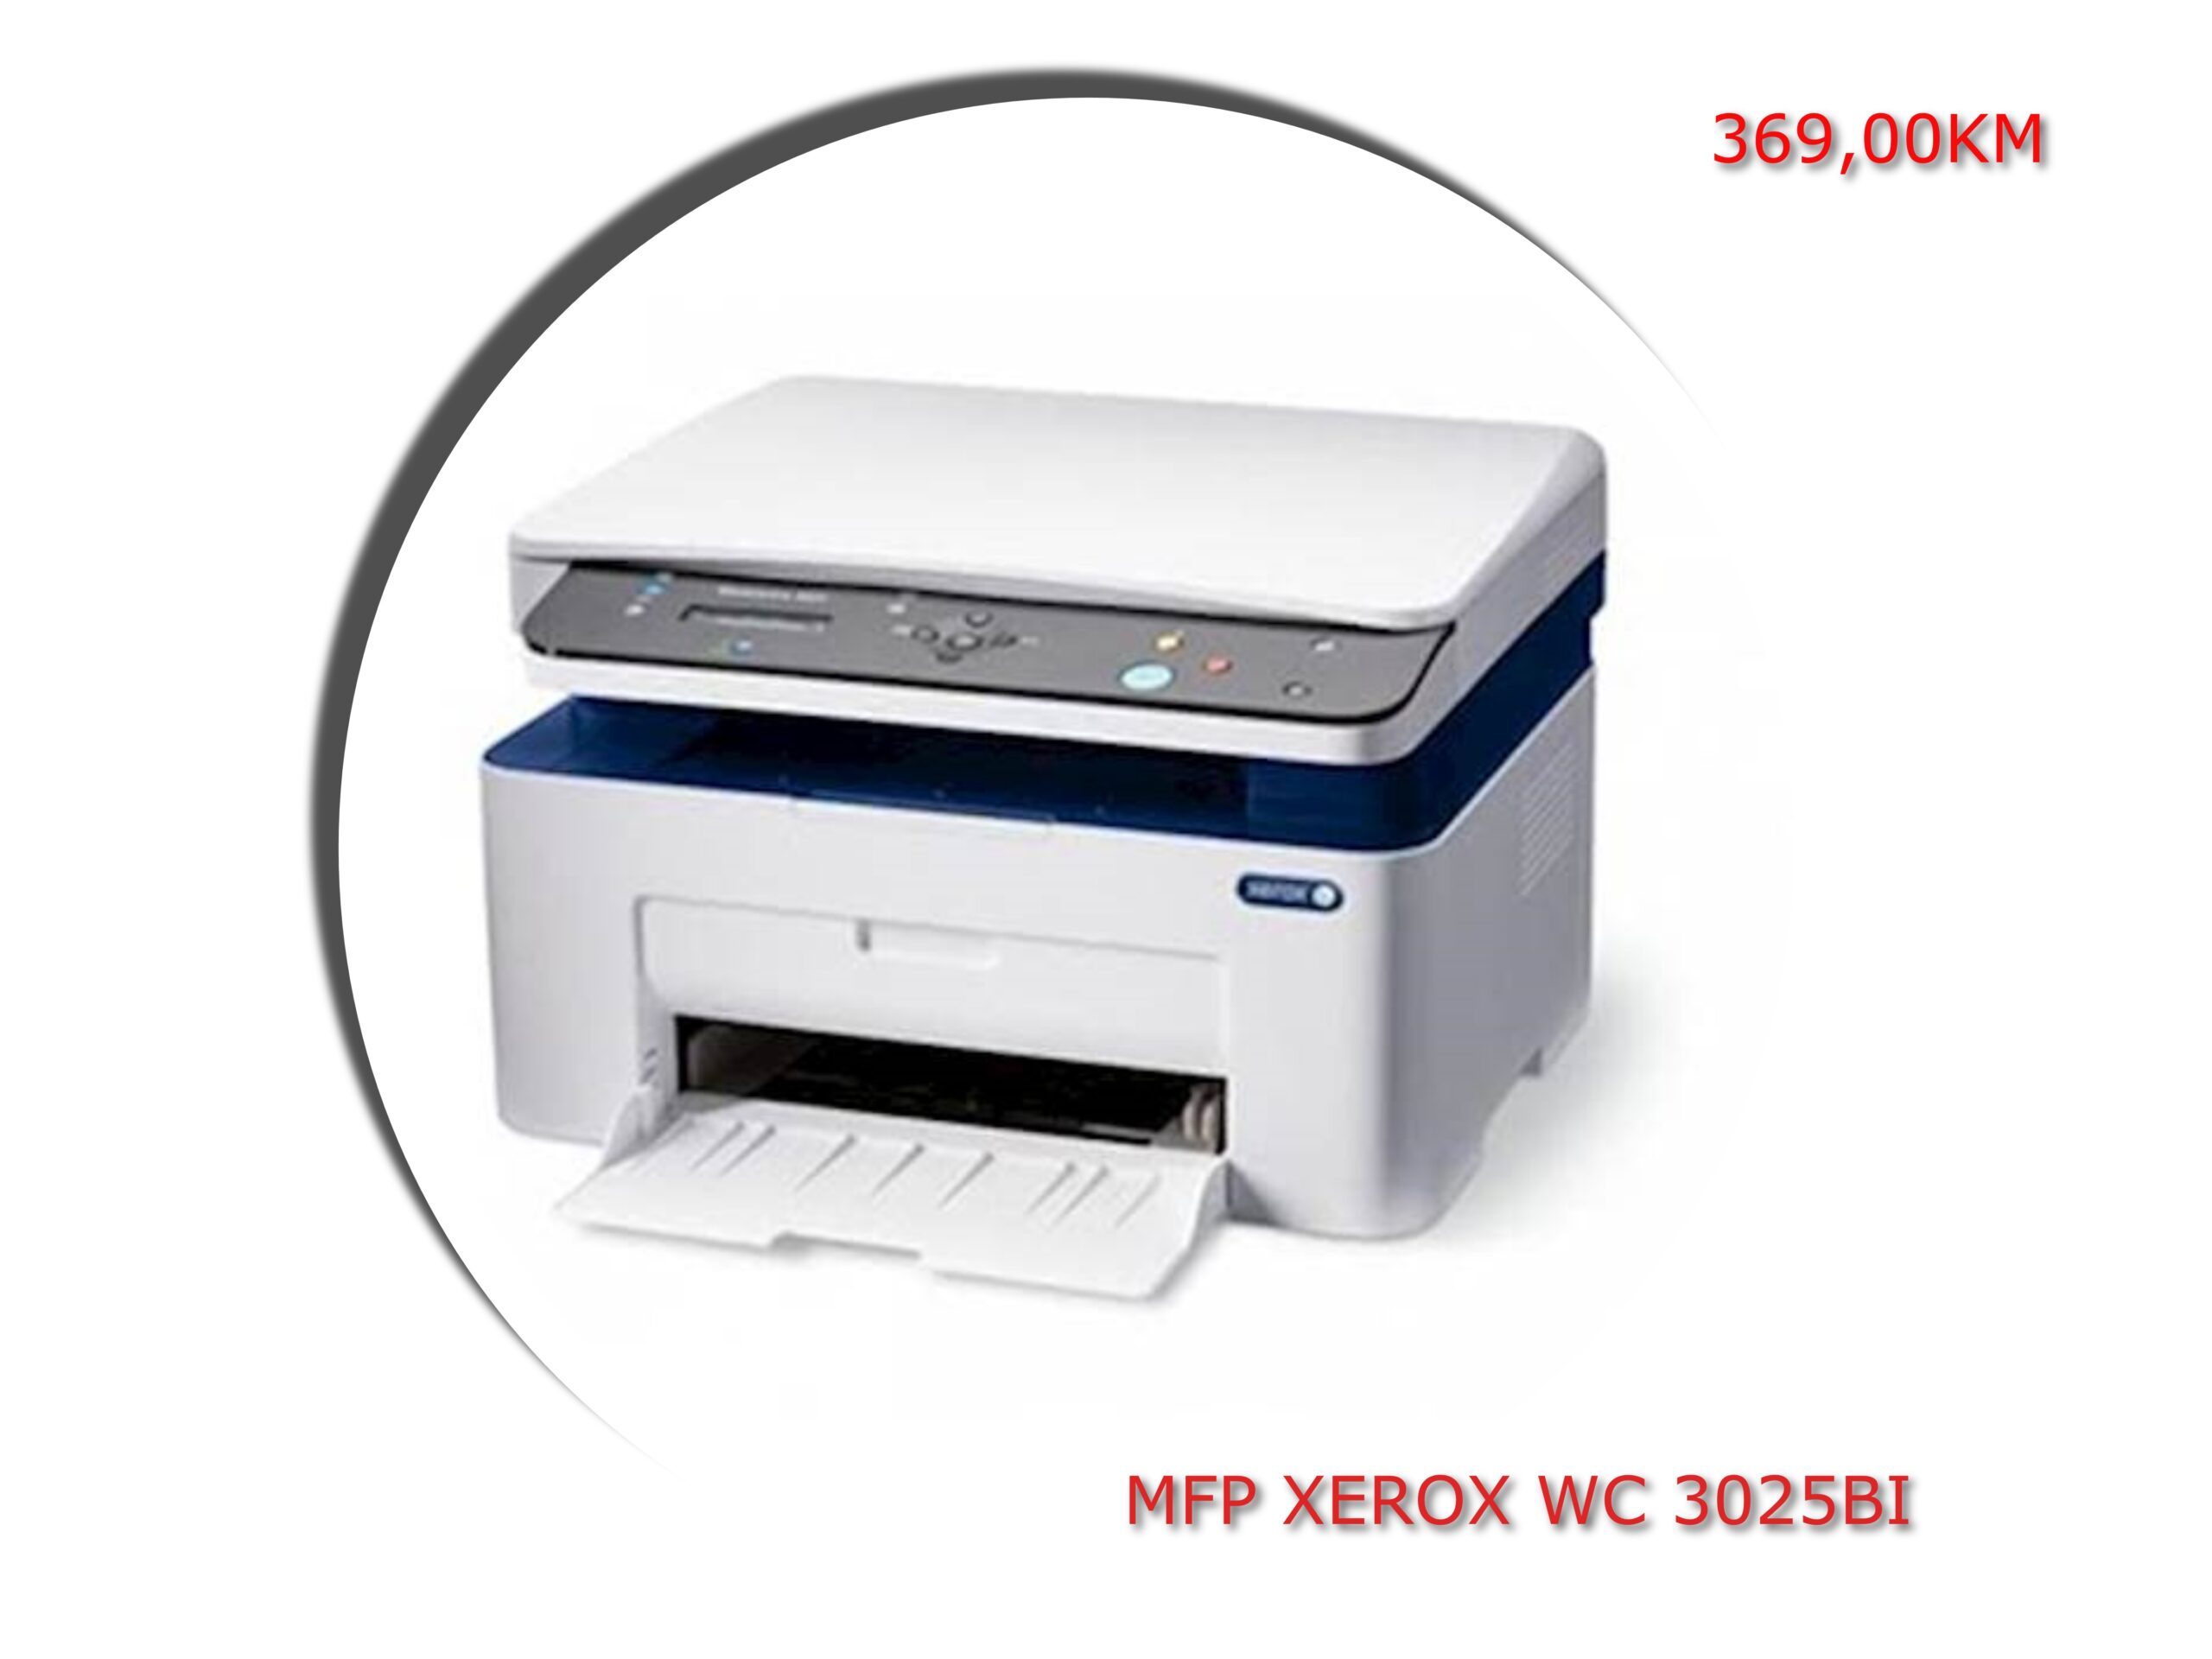 MFP XEROX WC 3025BI